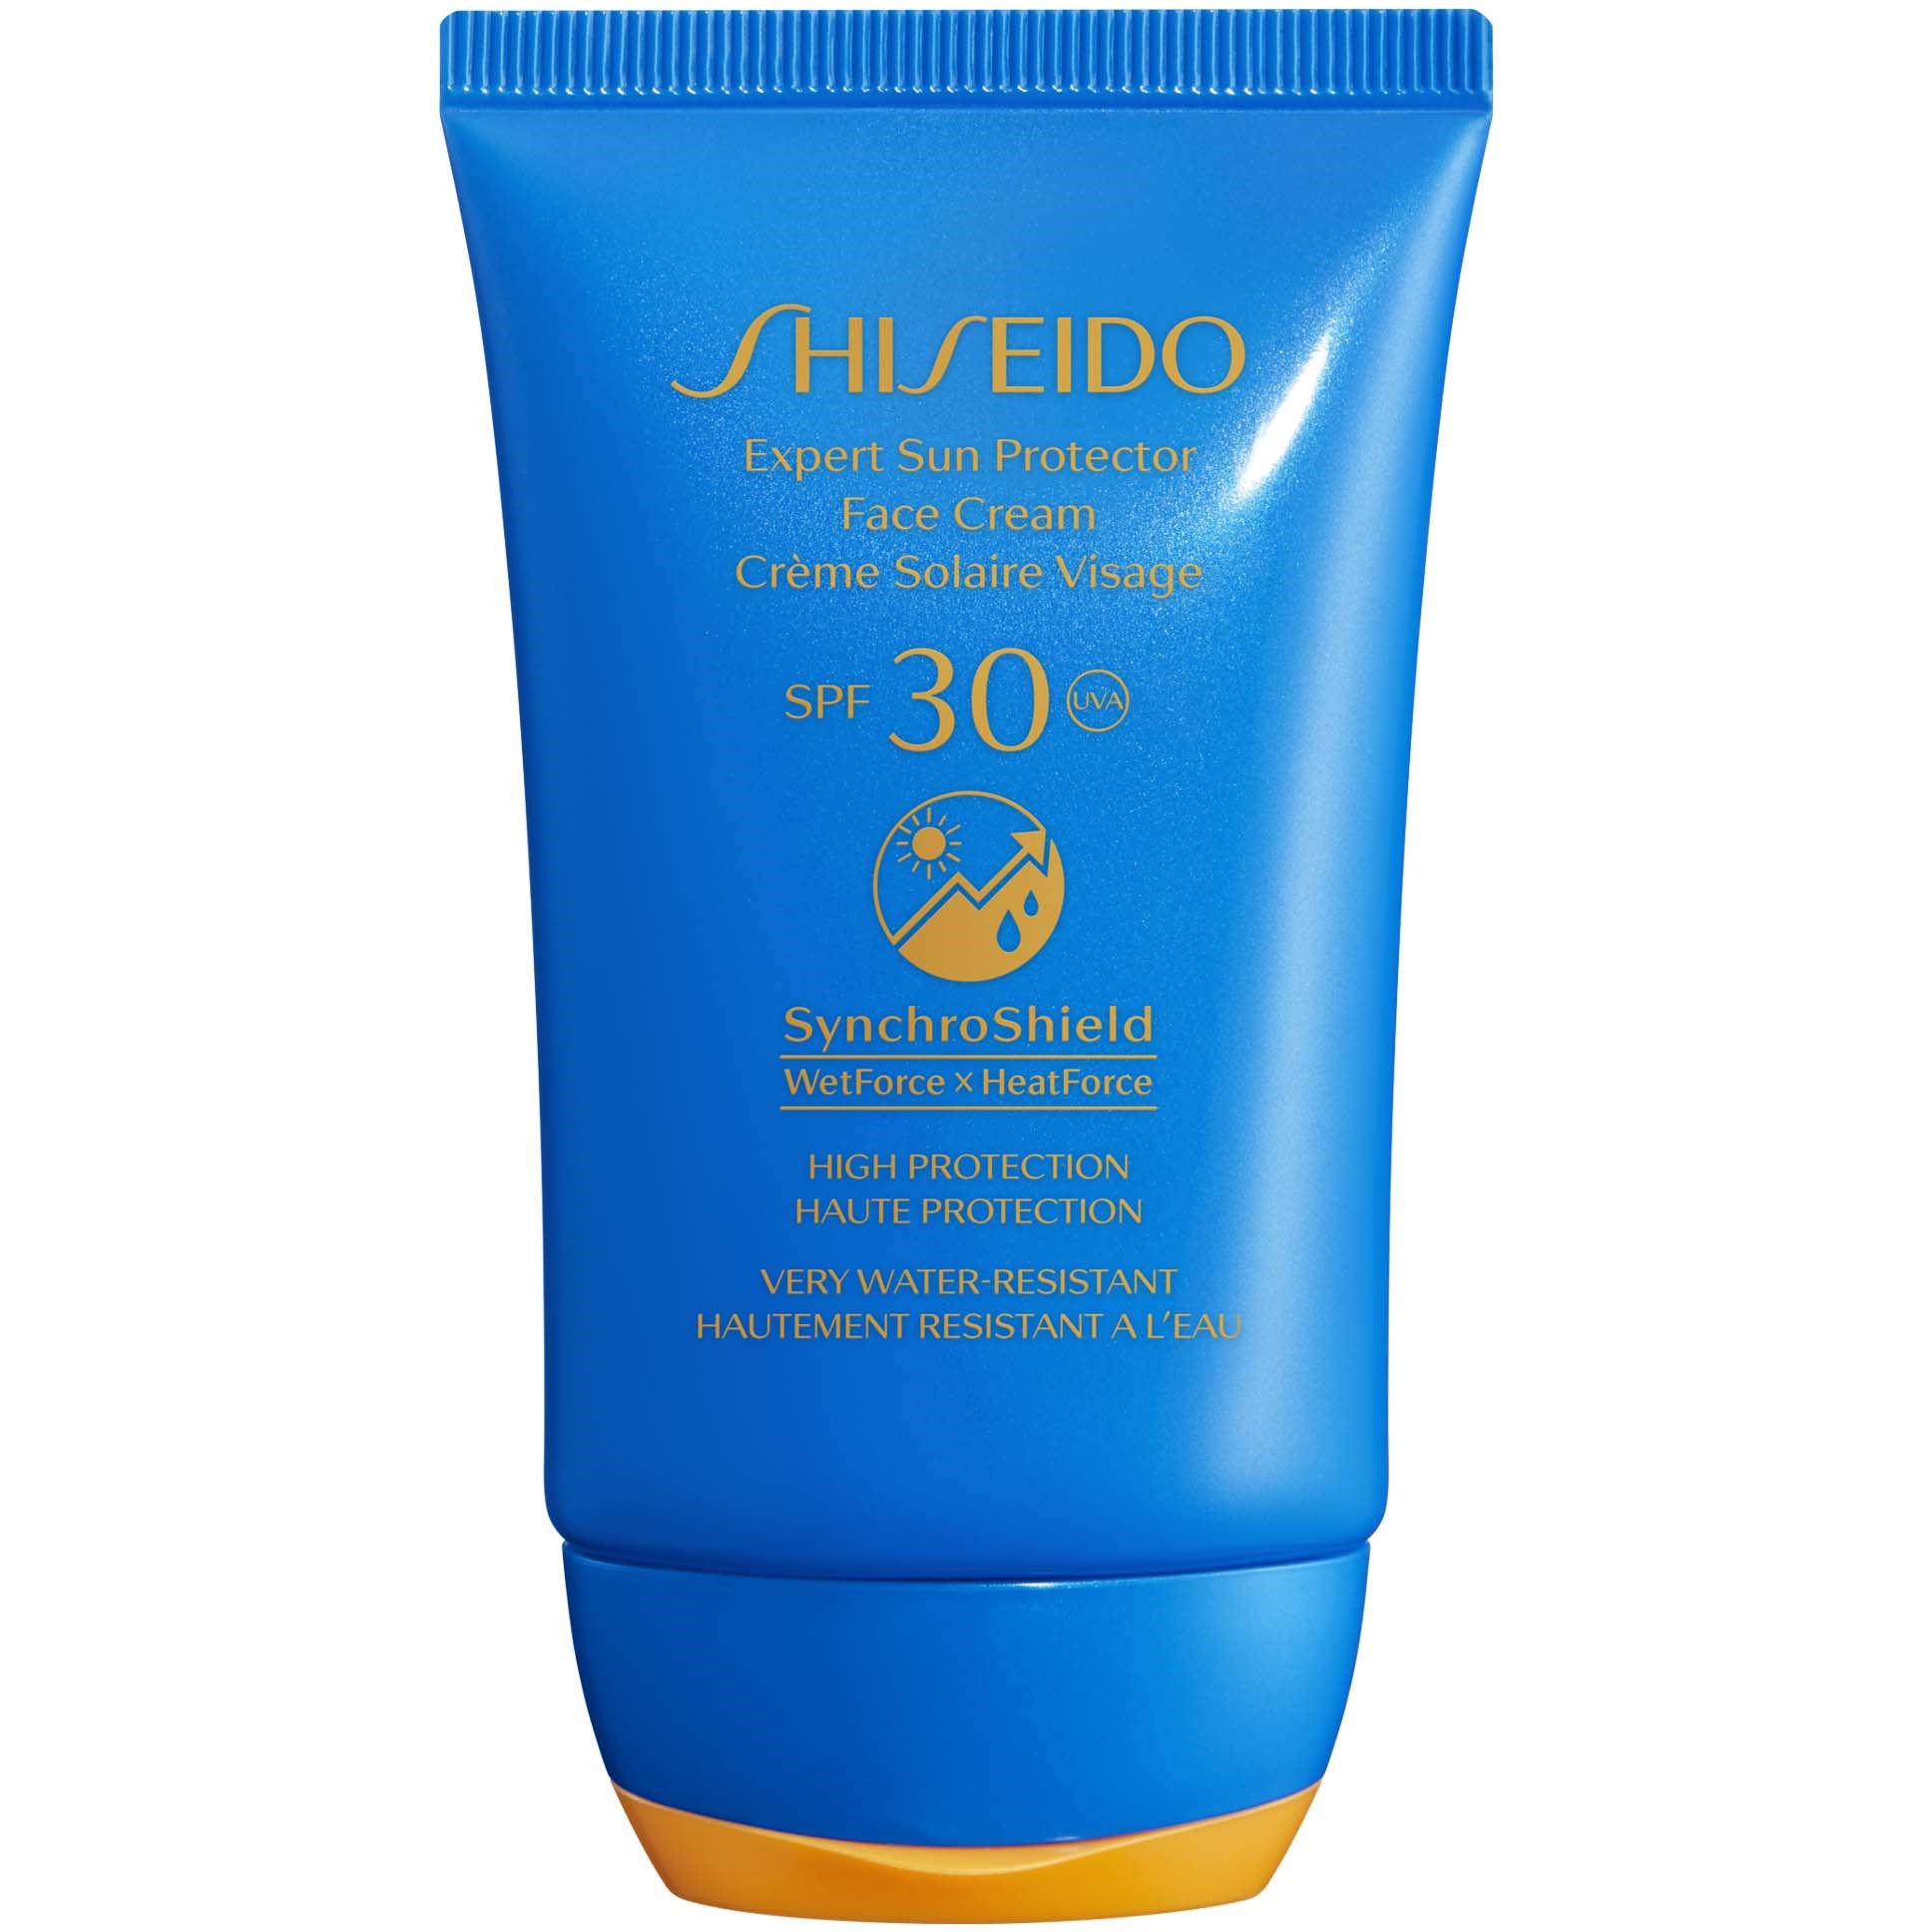 Shiseido Sun 30+ experts pro cream